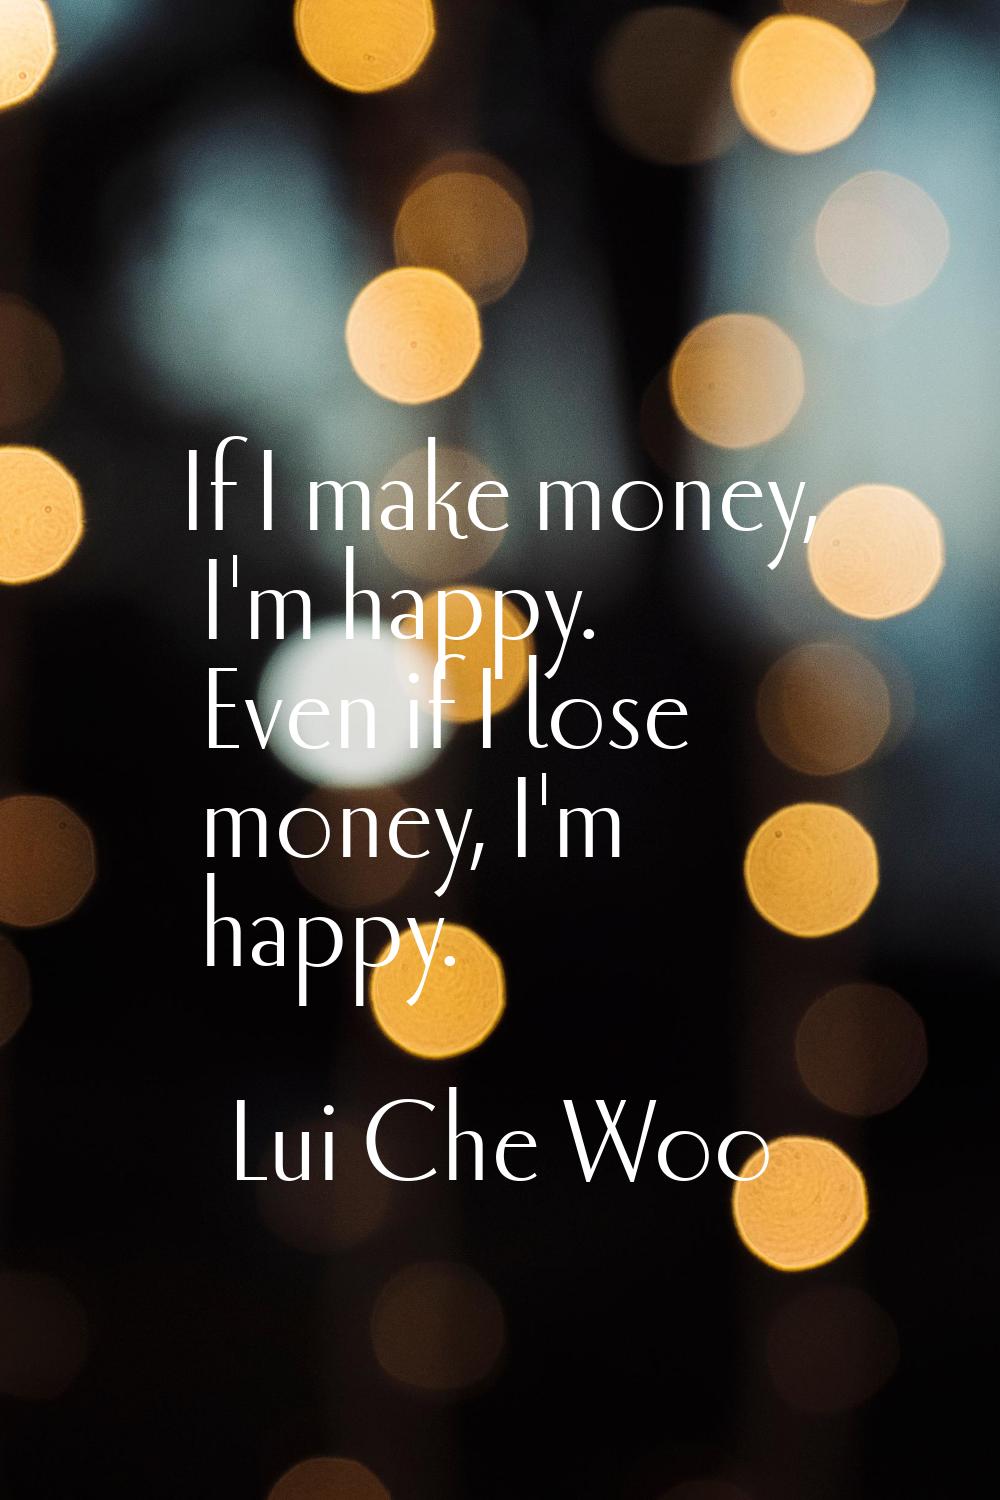 If I make money, I'm happy. Even if I lose money, I'm happy.